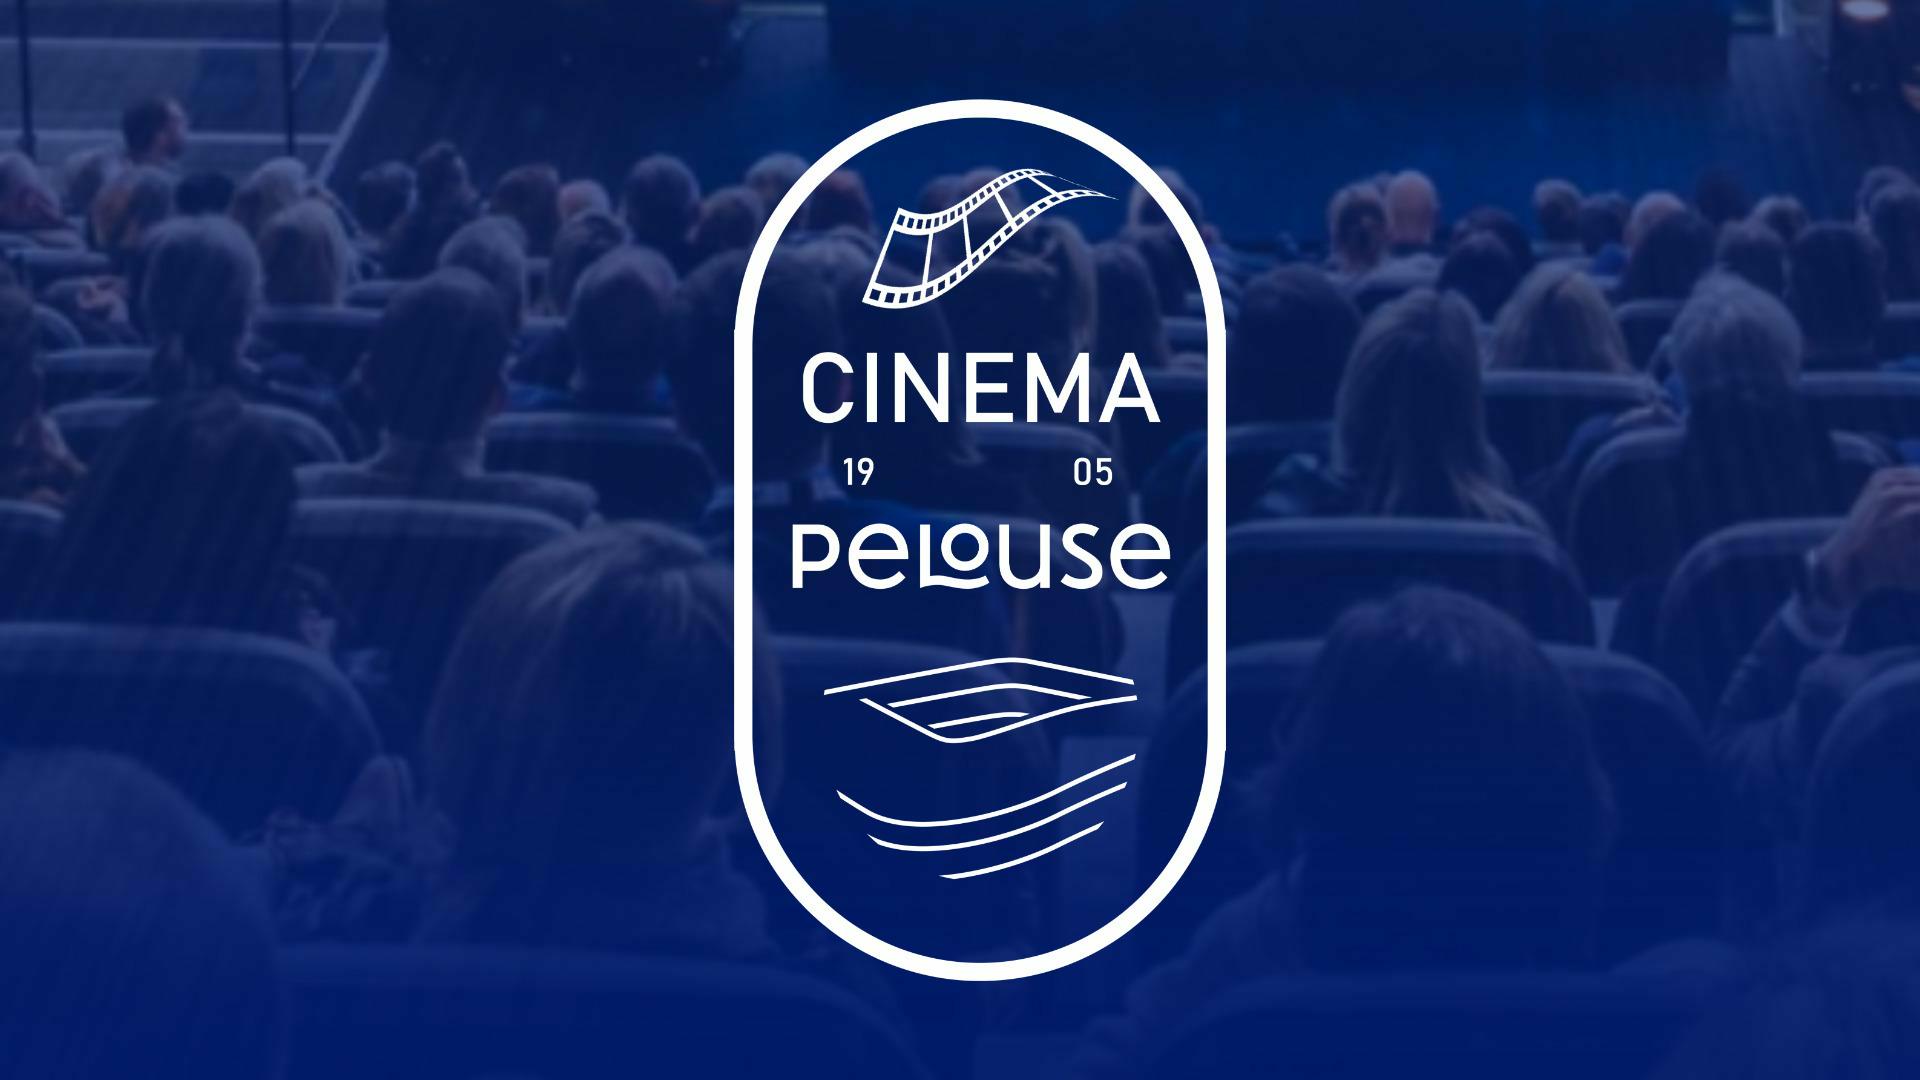 Cinema Pelouse